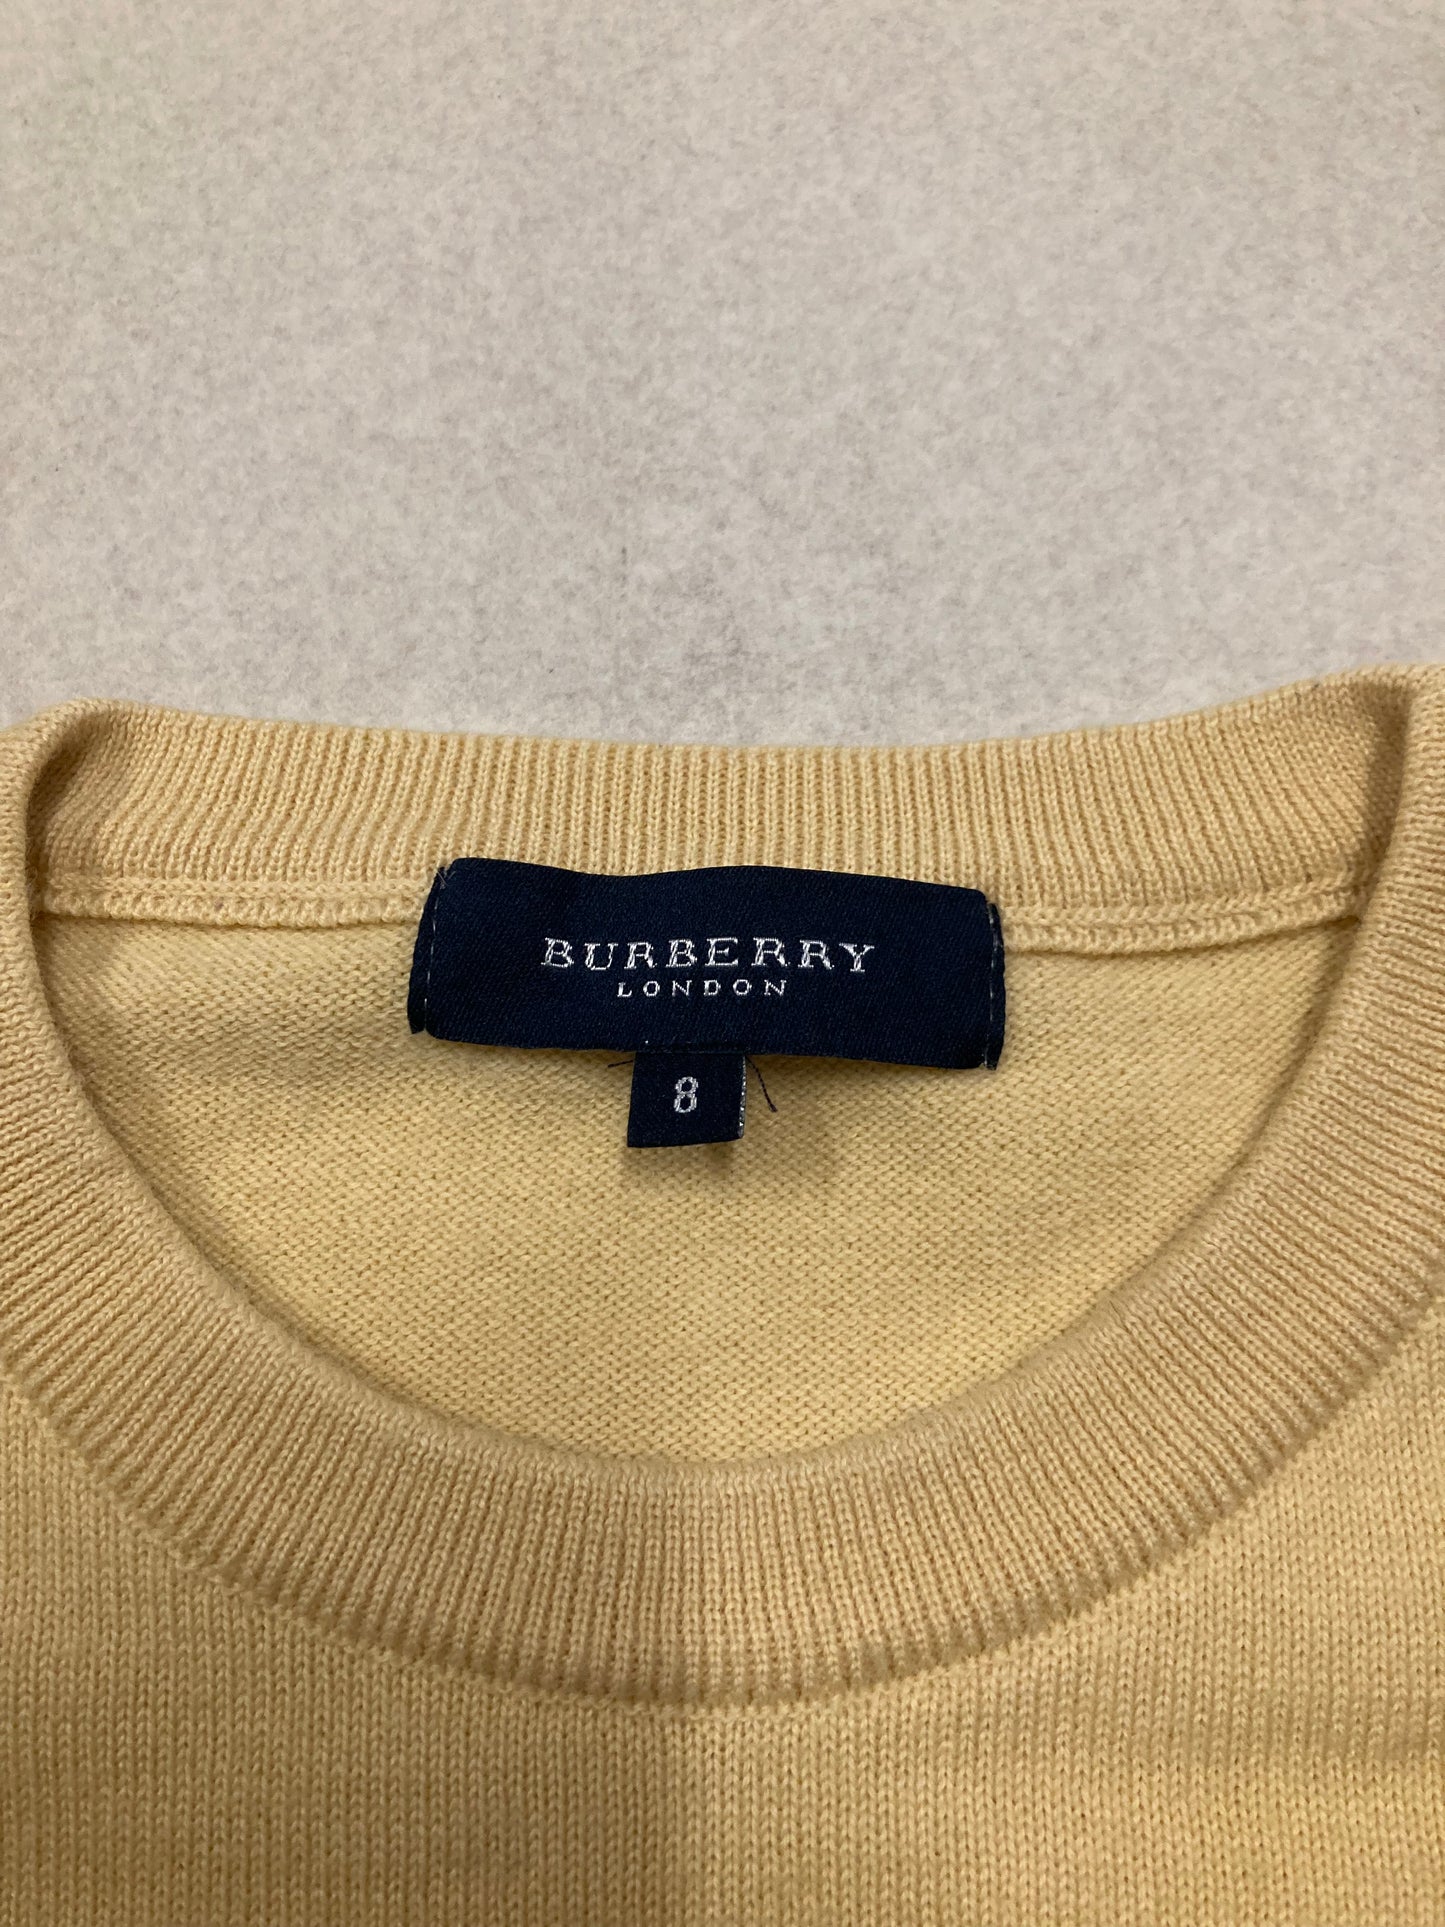 Burberry 00s Vintage Sweater - M